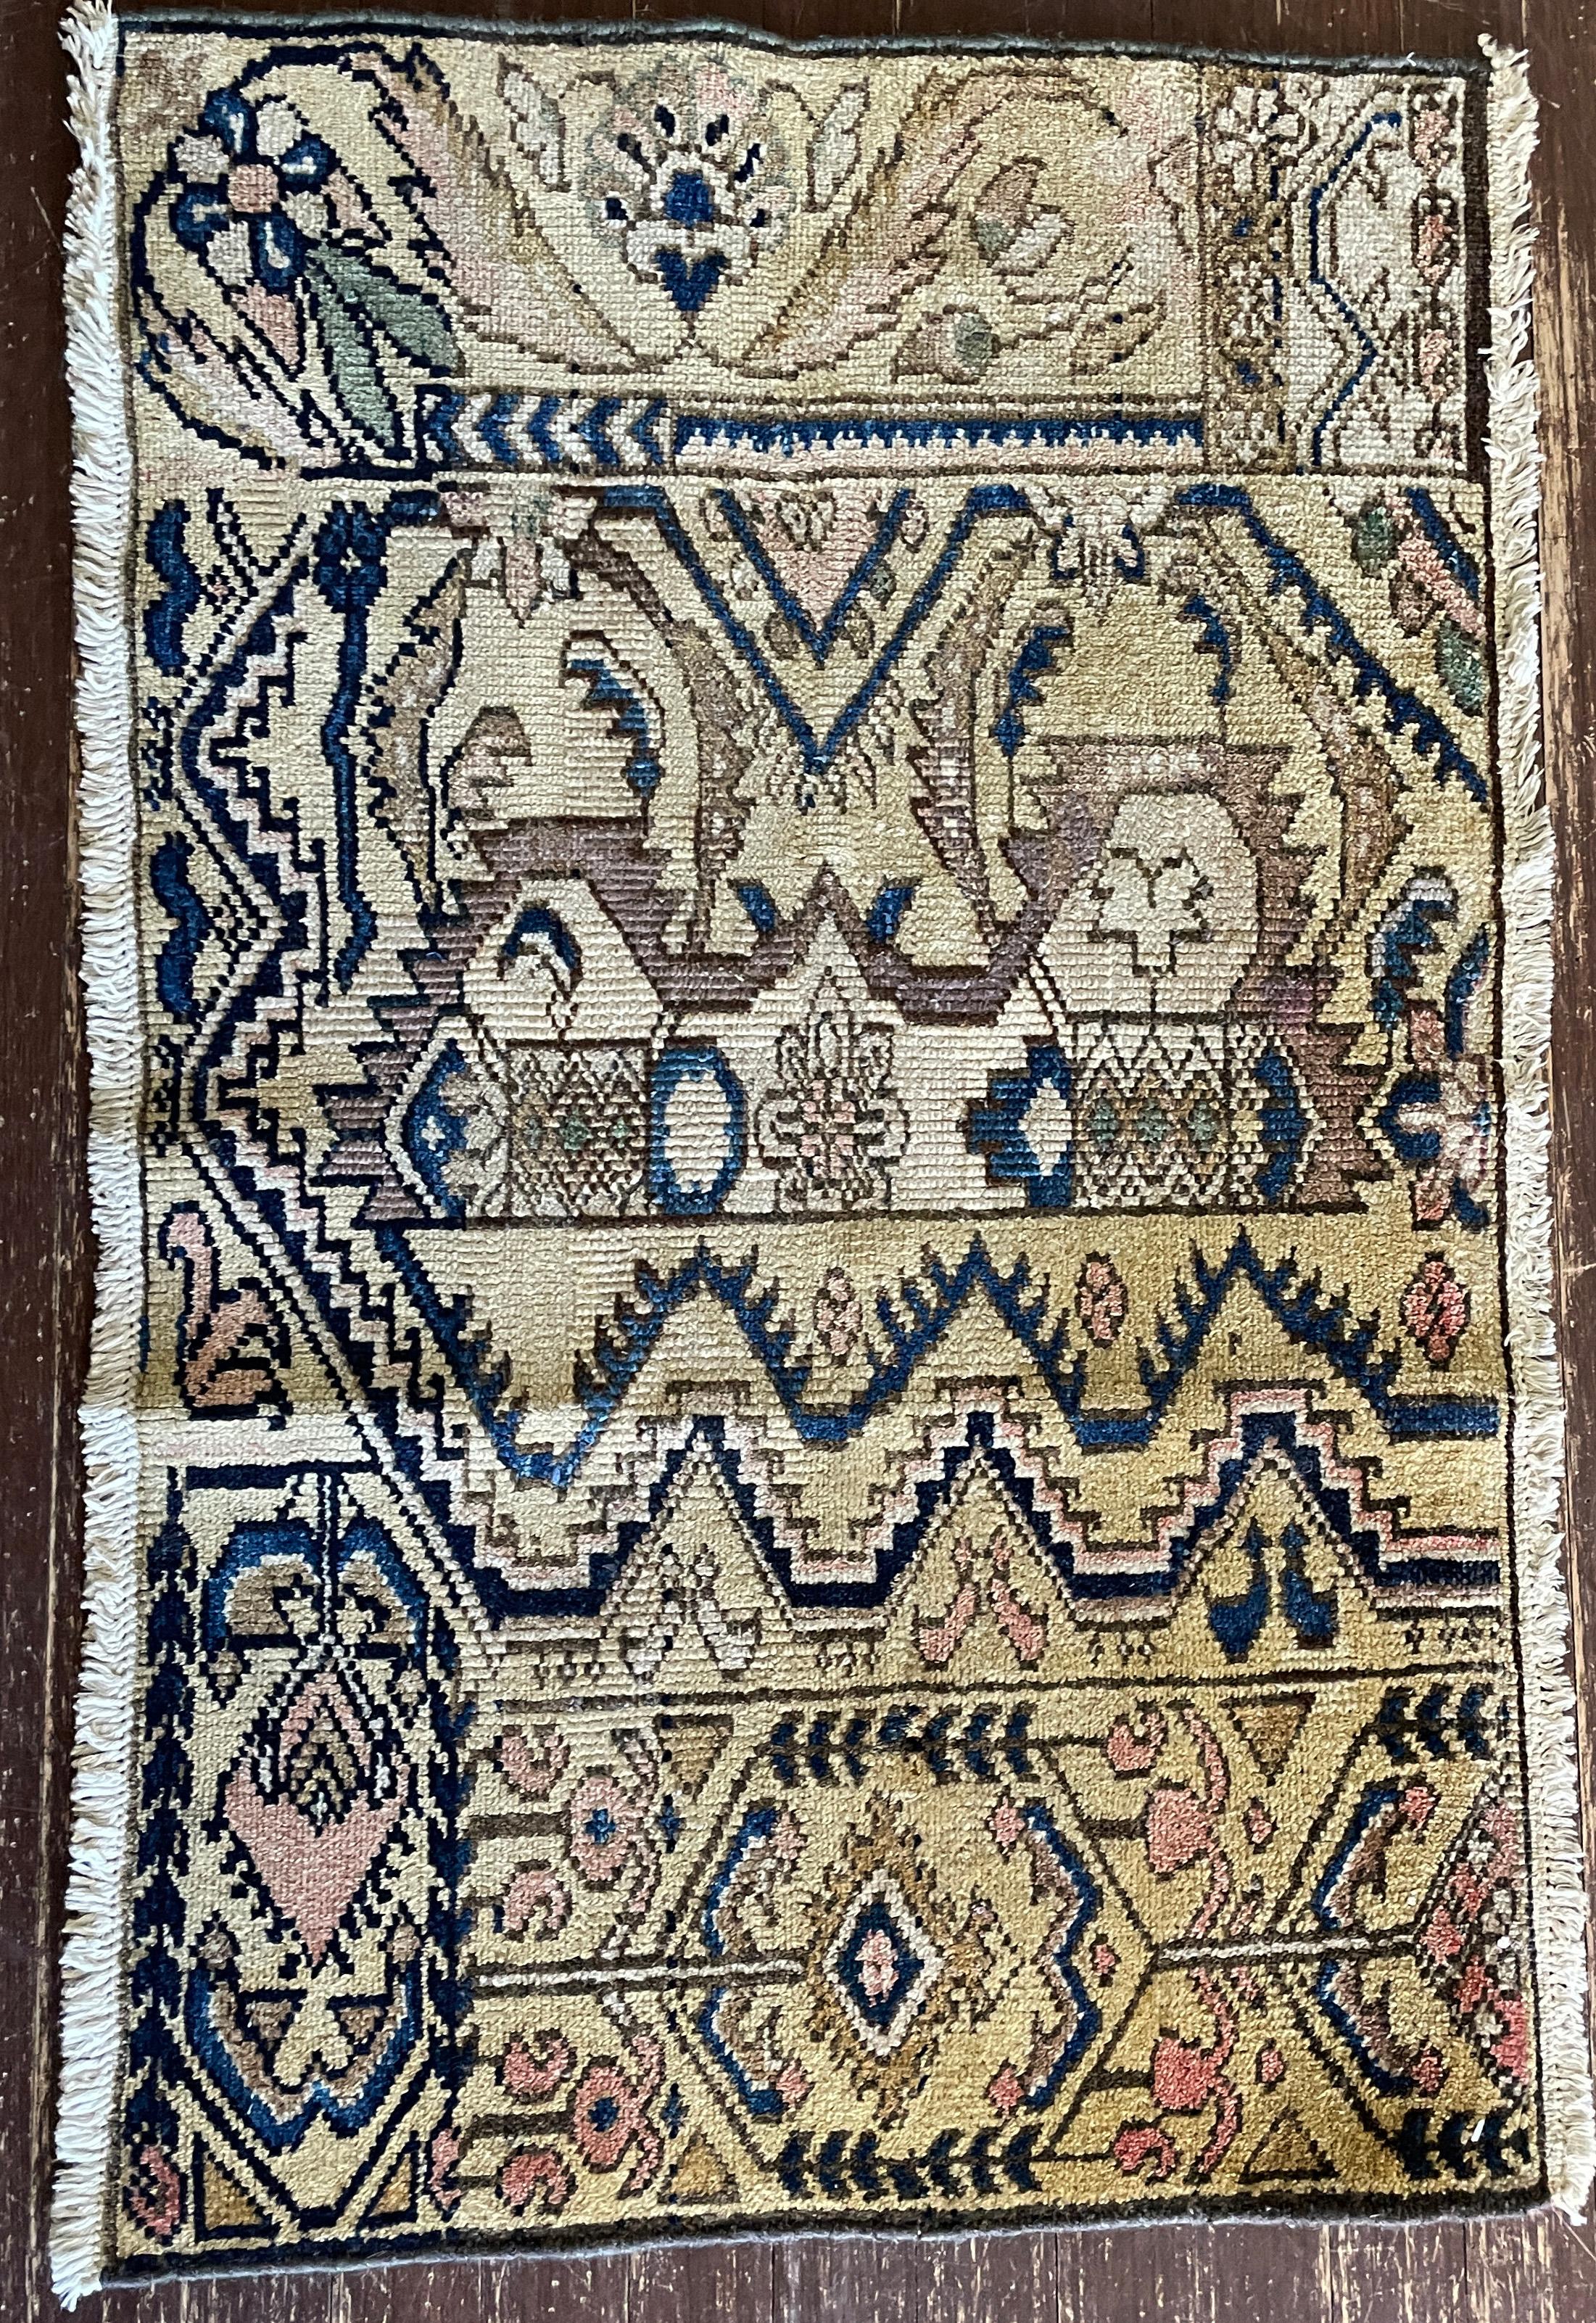 Hand-Knotted Antique Bakhtiari Sampler Rug, Great Colors